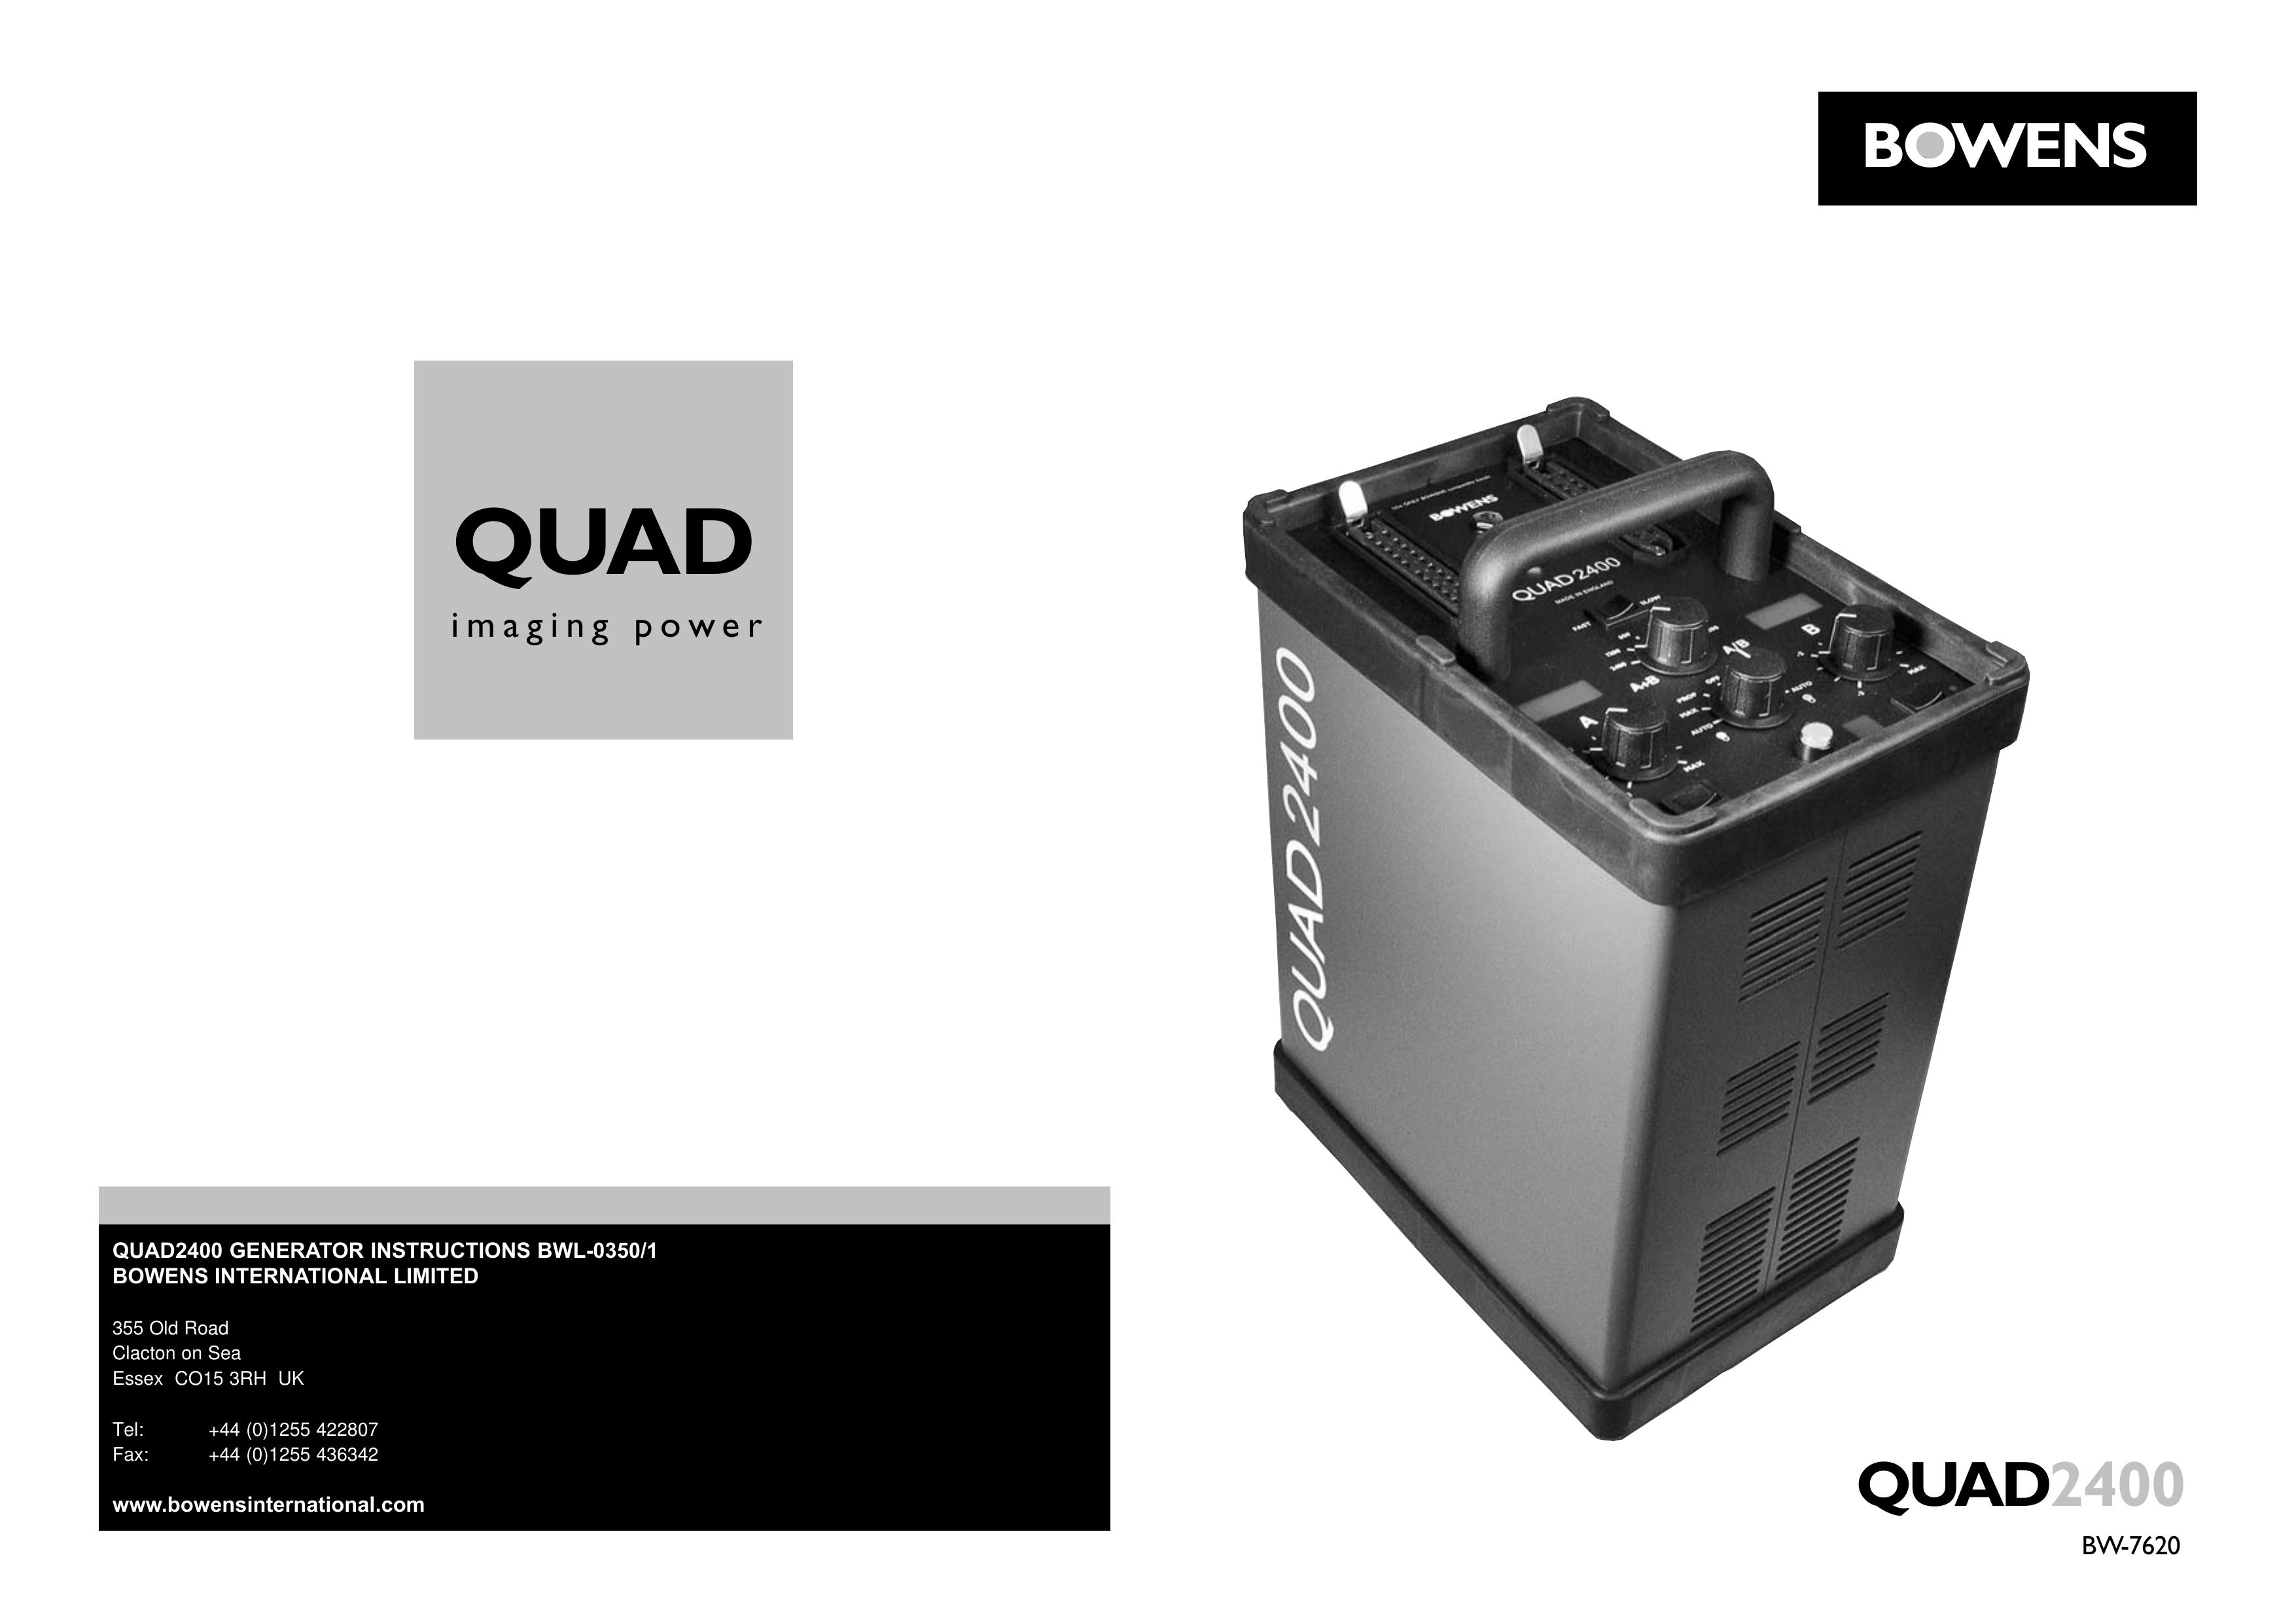 Bowens QUAD2400 Portable Generator User Manual